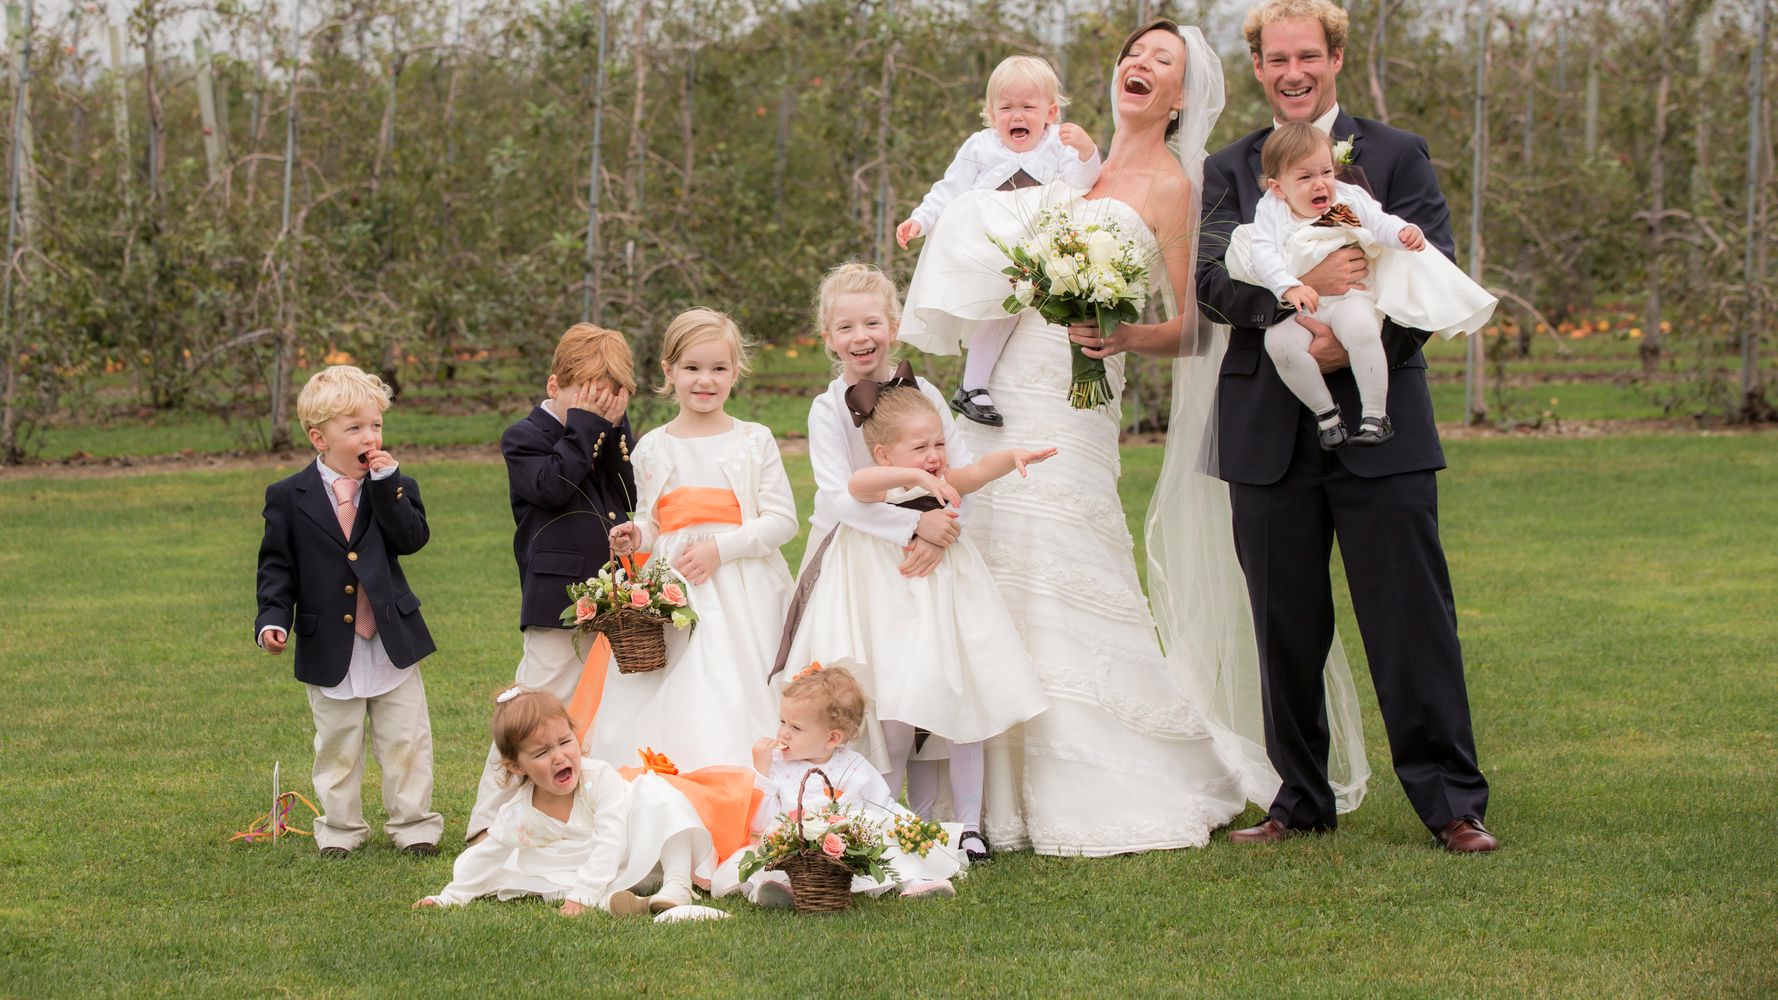 17 Hilarious But Unfortunate Wedding Fails Captured On Camera | HuffPost  Life